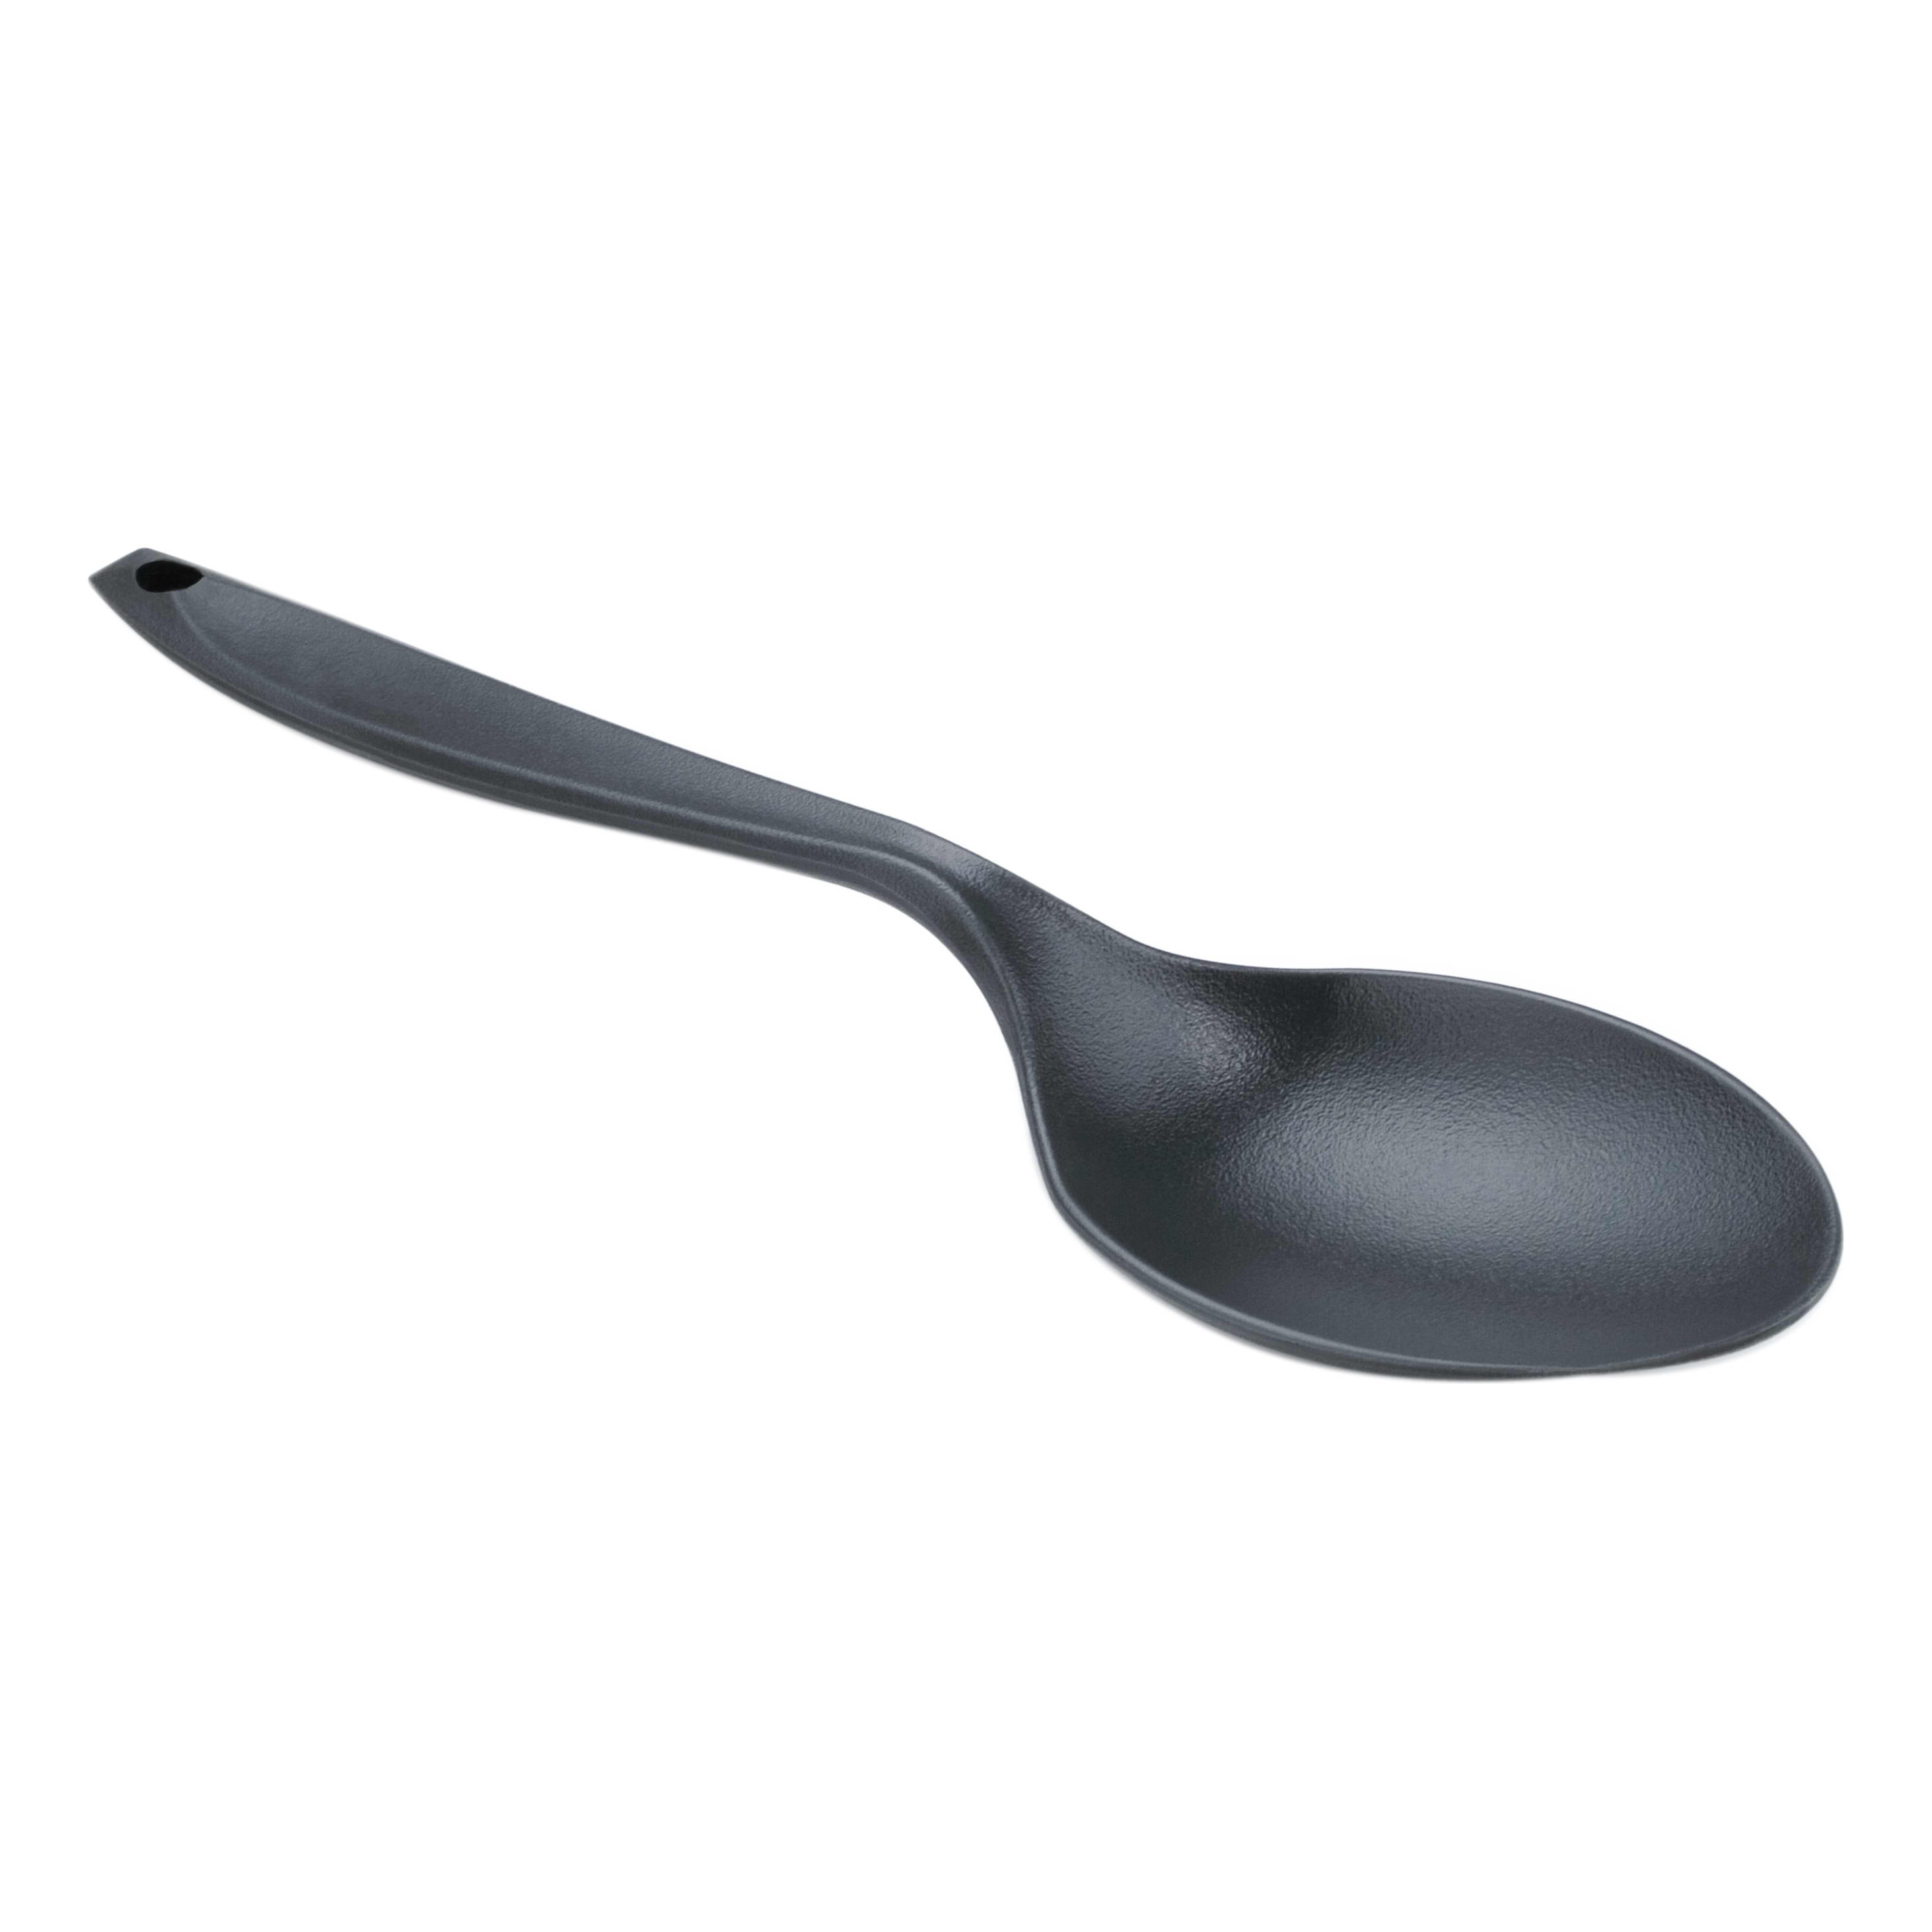 GSI Outdoors Camp Cutlery - Spoon